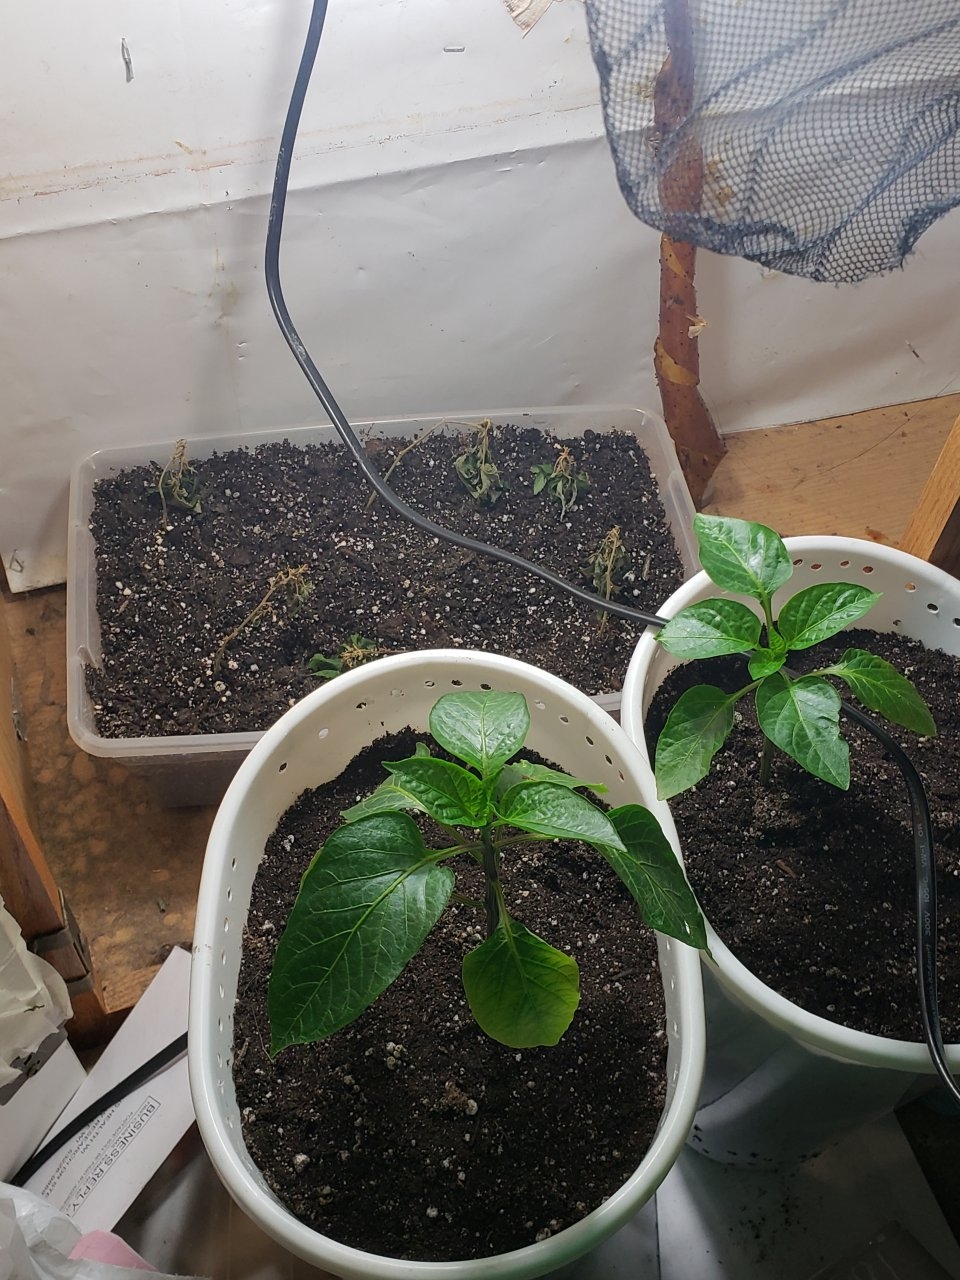 Hibrix clones failing but pepper plants on point lol